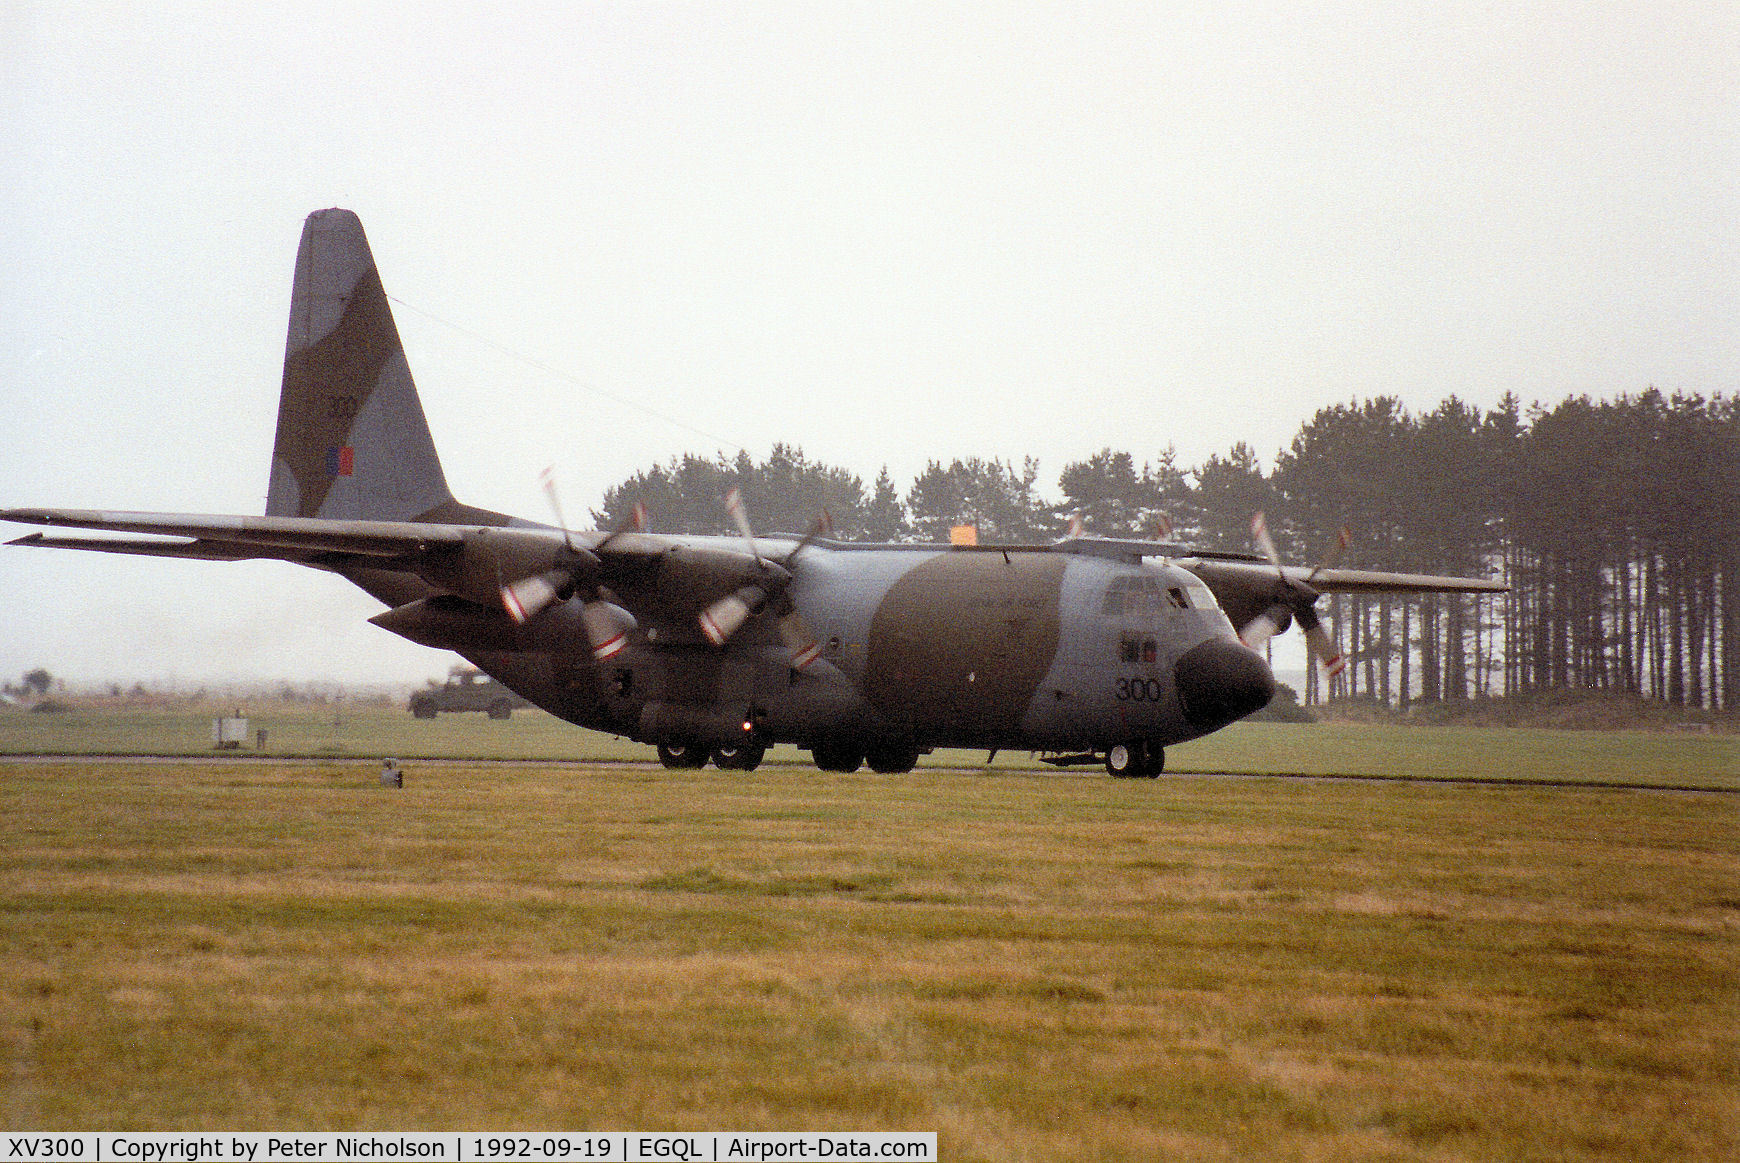 XV300, 1967 Lockheed C-130K Hercules C.1 C/N 382-4267, Hercules C.1 of the Lyneham Transport Wing taking off at the 1992 RAF Leuchars Airshow.